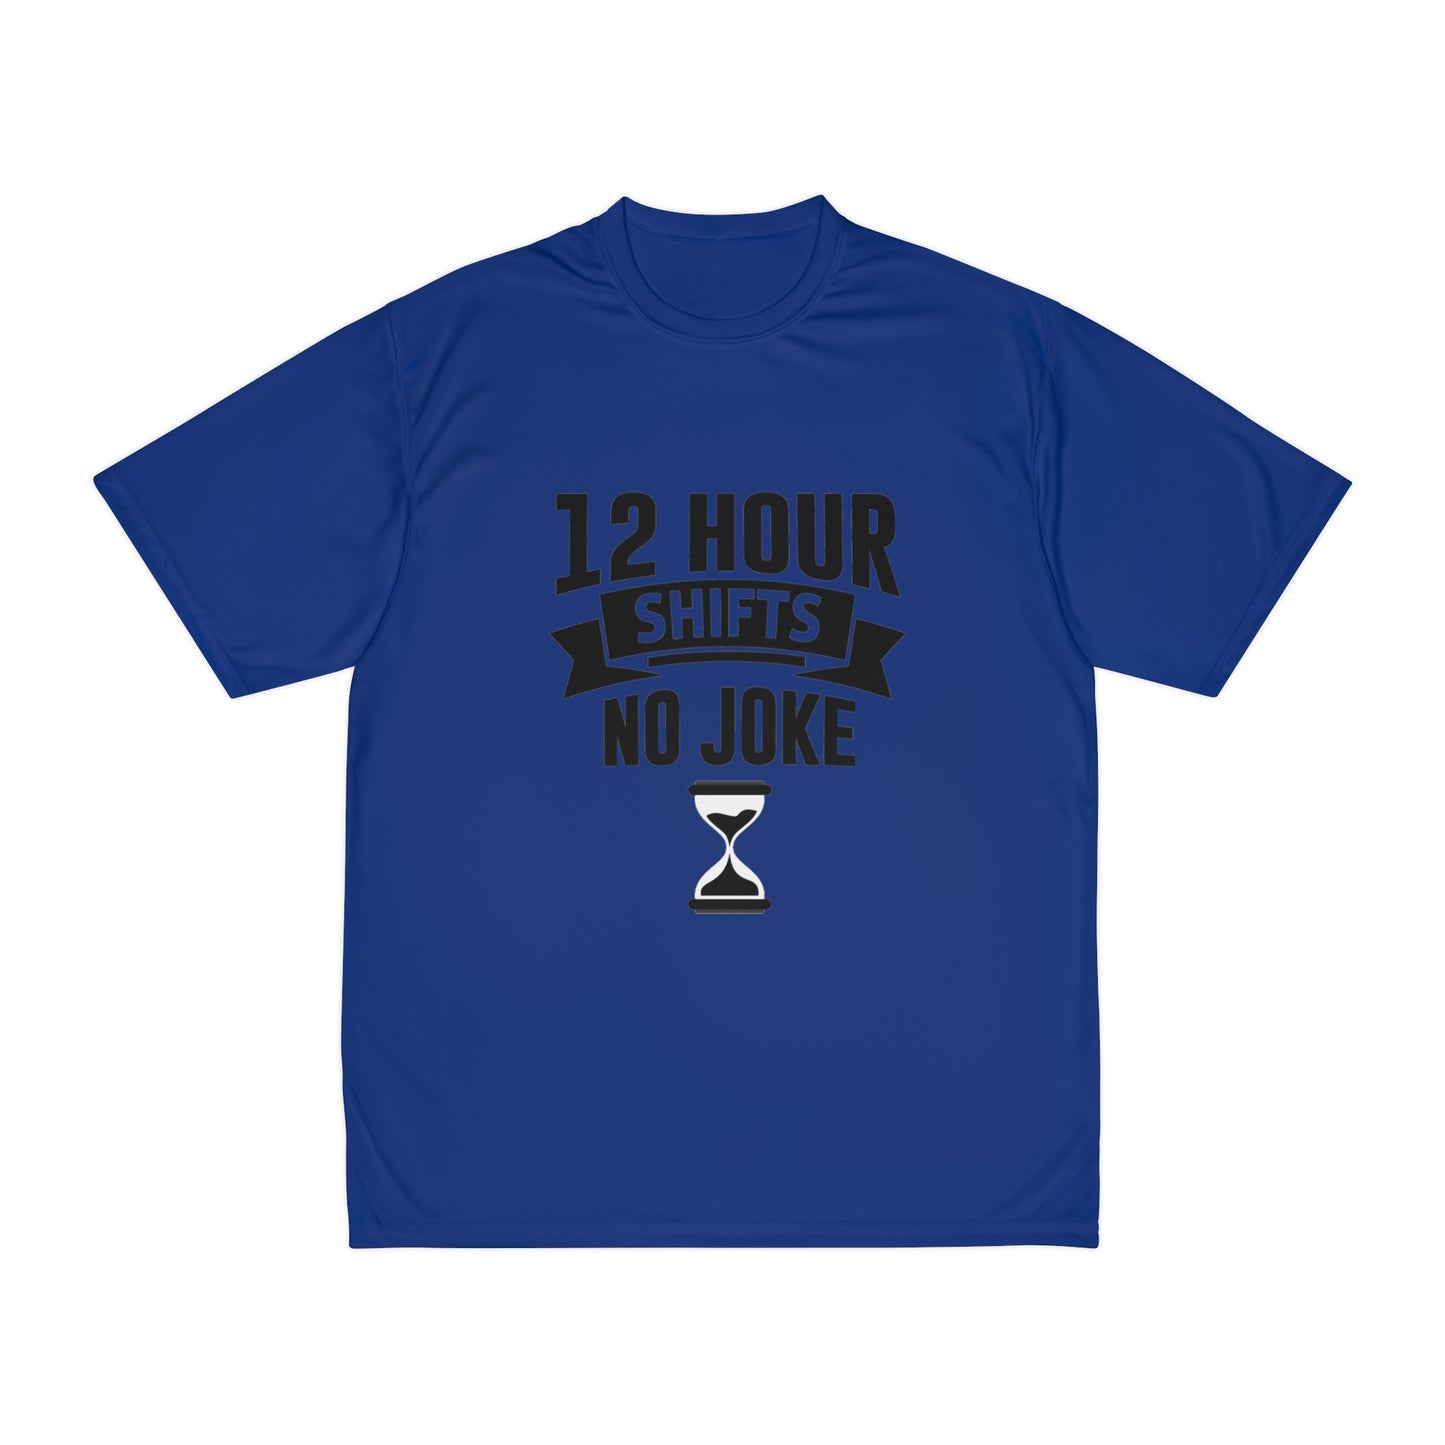 12 Hour Shifts No Joke Performance T-Shirt, Doctor shirts, Doctor gift ideas, New Doctor shirt, Future doctor shirt, gift for doctors